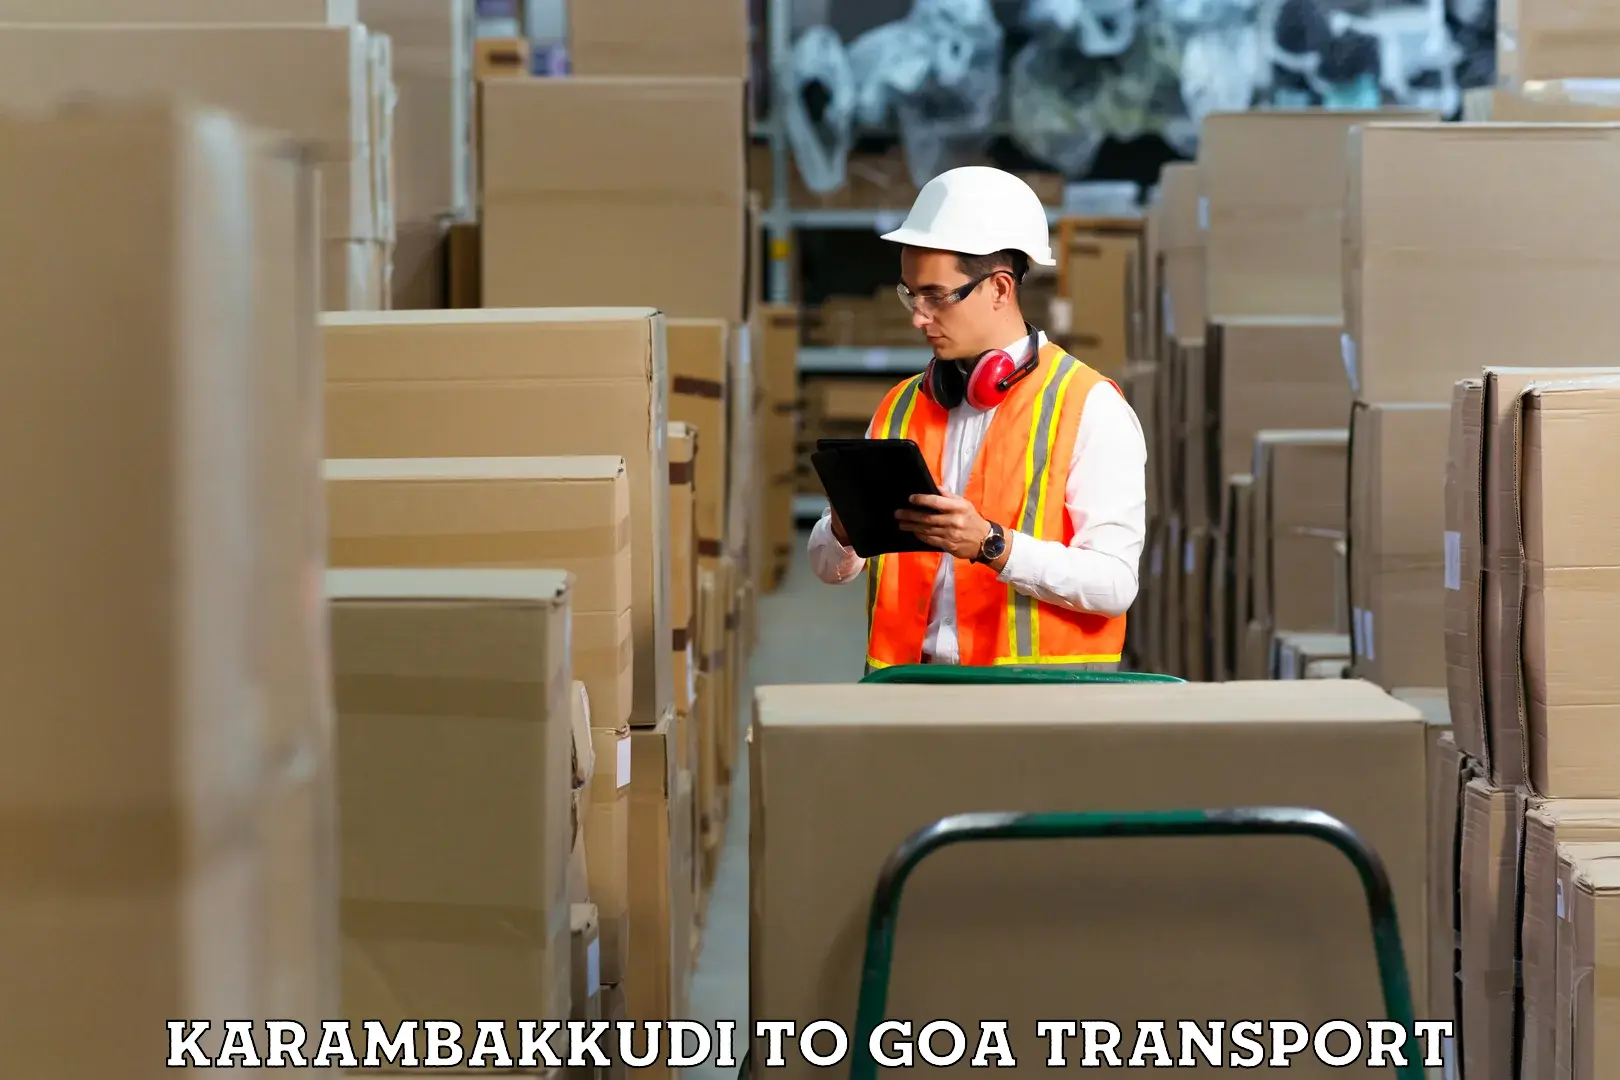 Daily parcel service transport Karambakkudi to Panaji